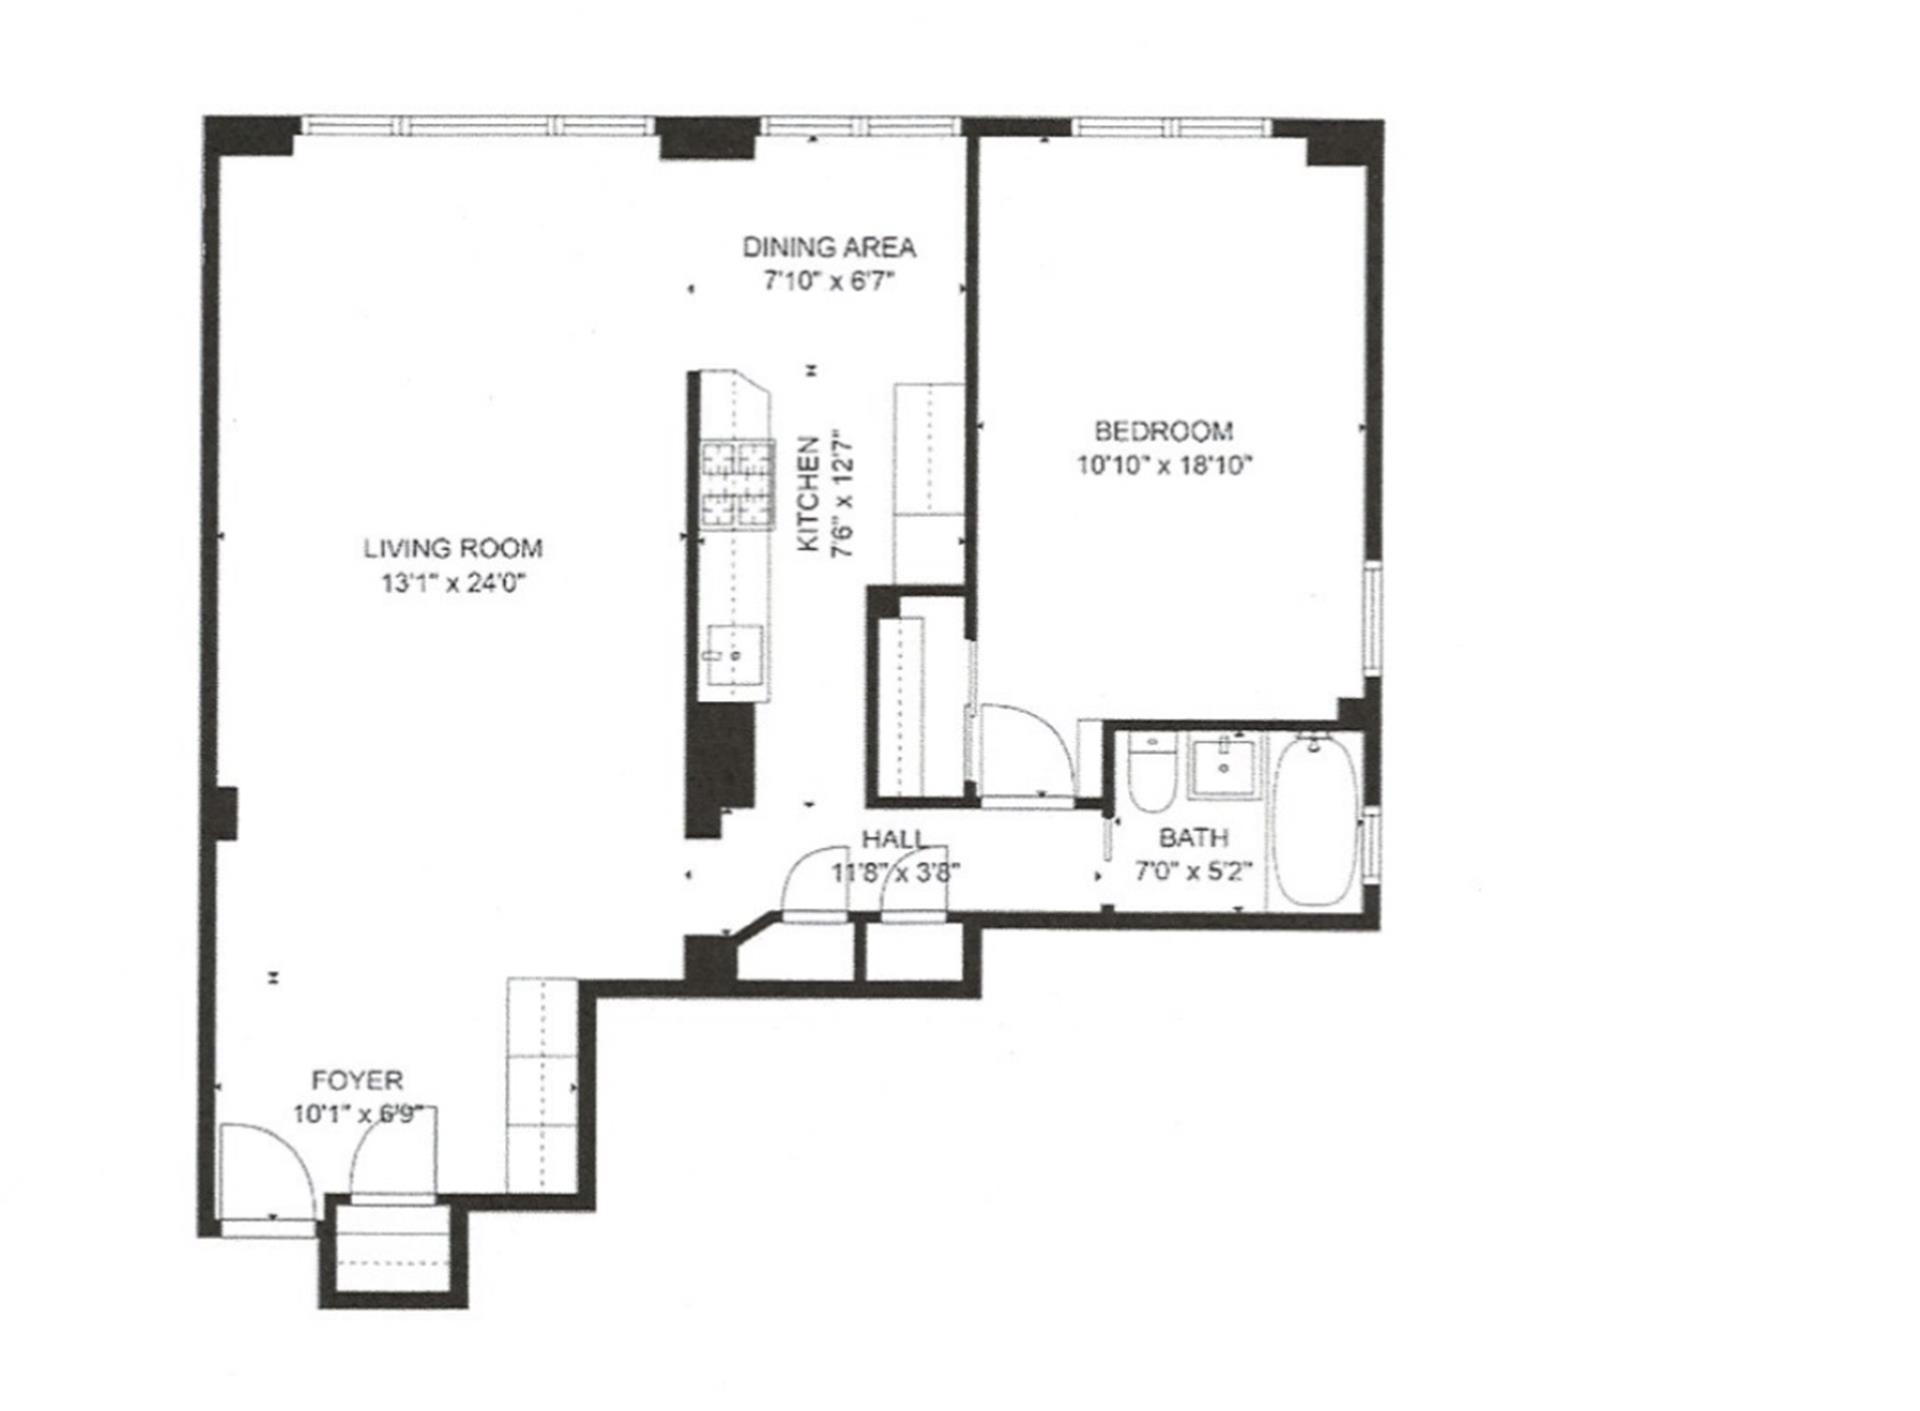 Floorplan for 233 East 69th Street, 7I